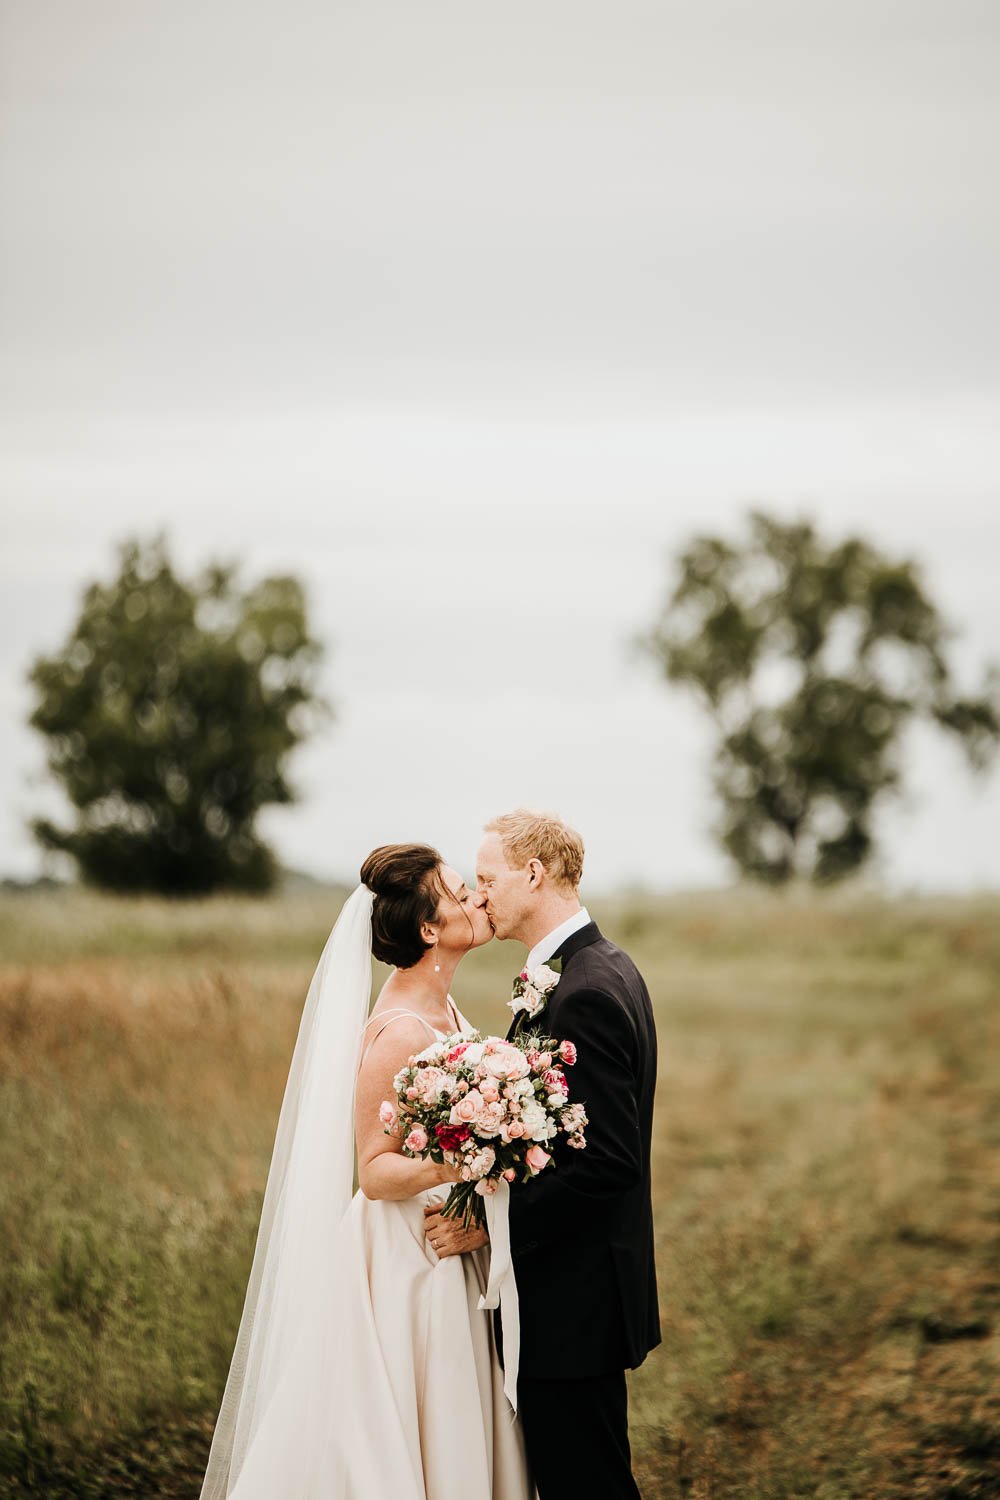 Groom kissing bride in country field